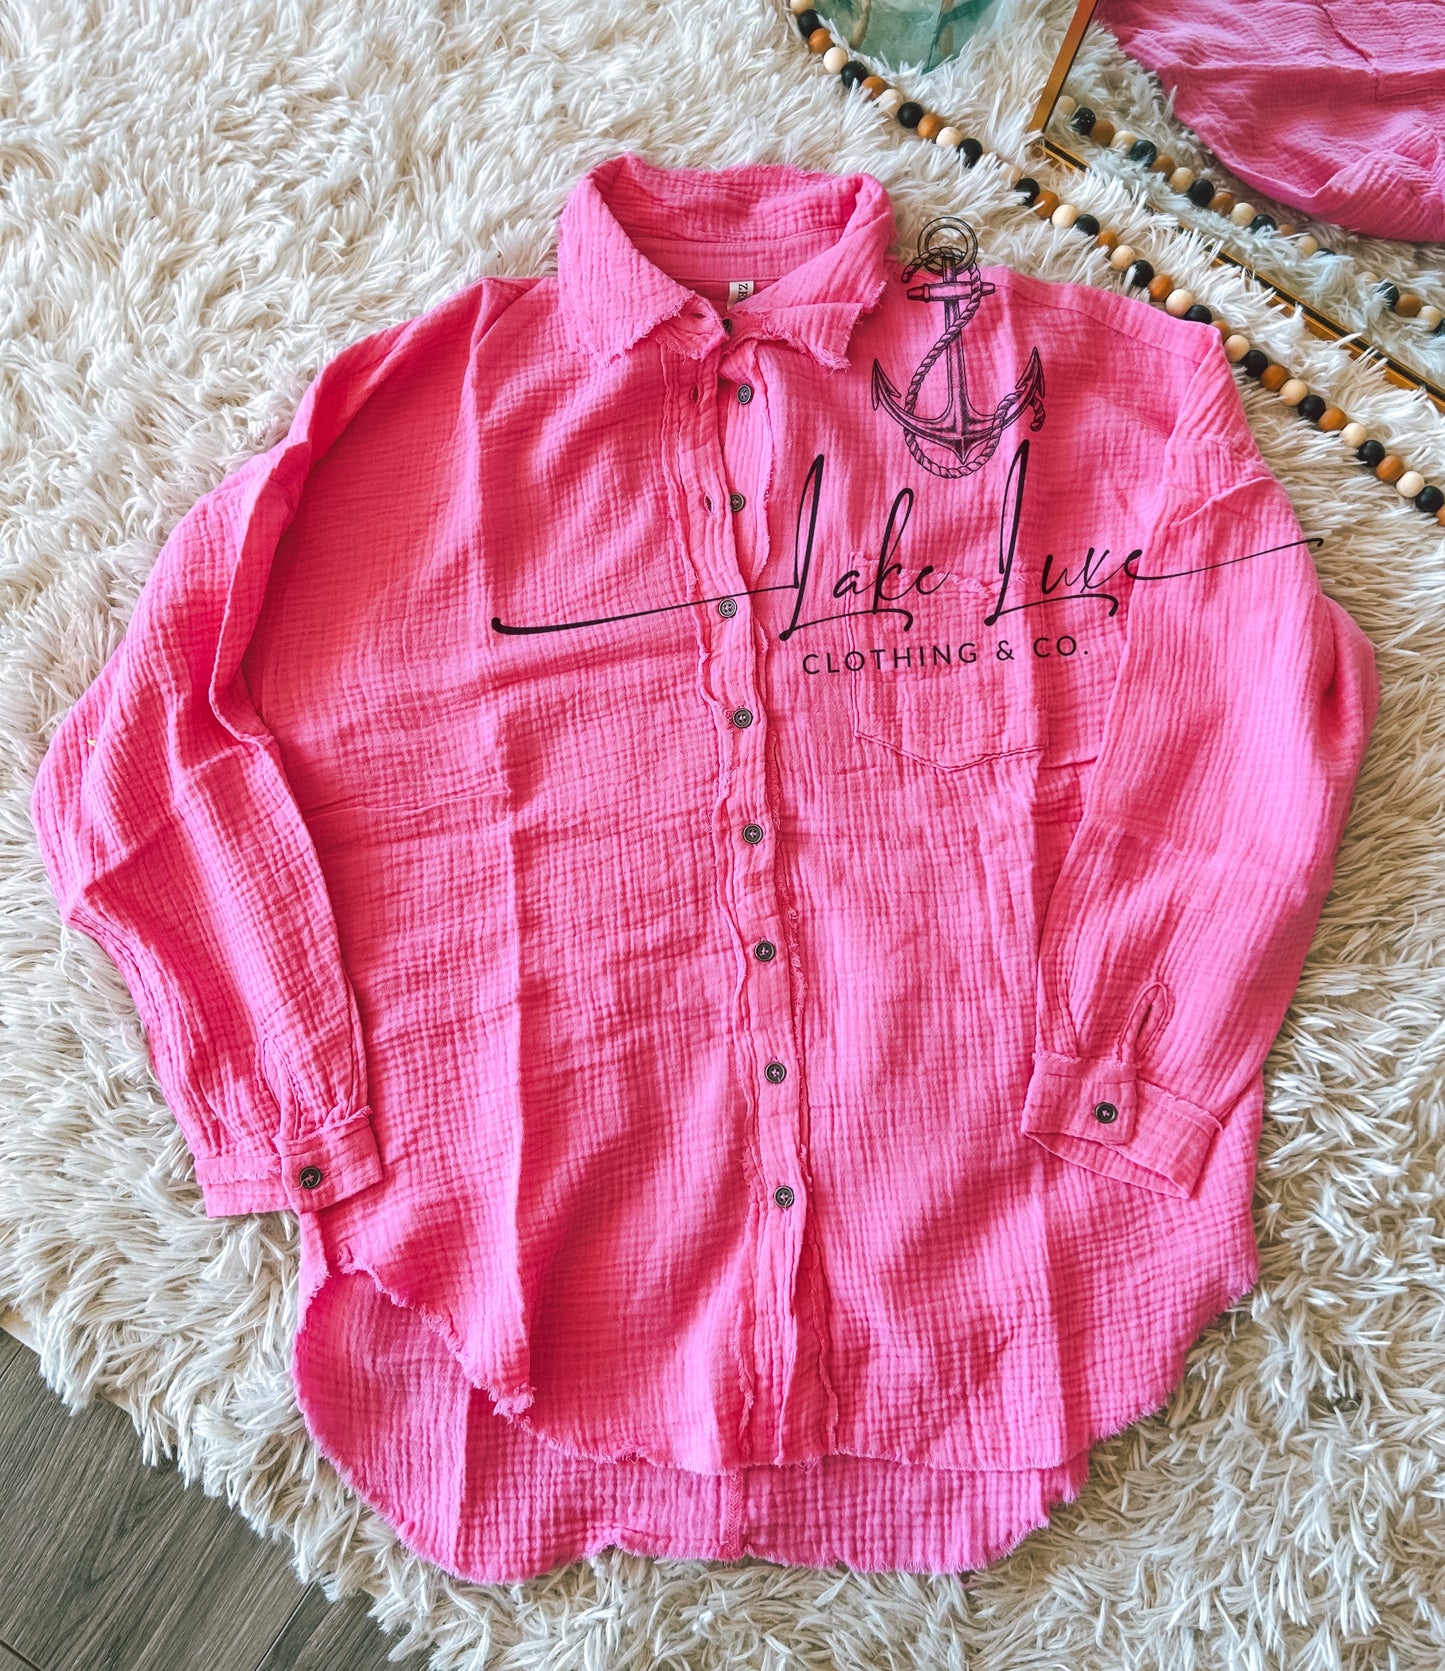 Pink gauze button up shirt